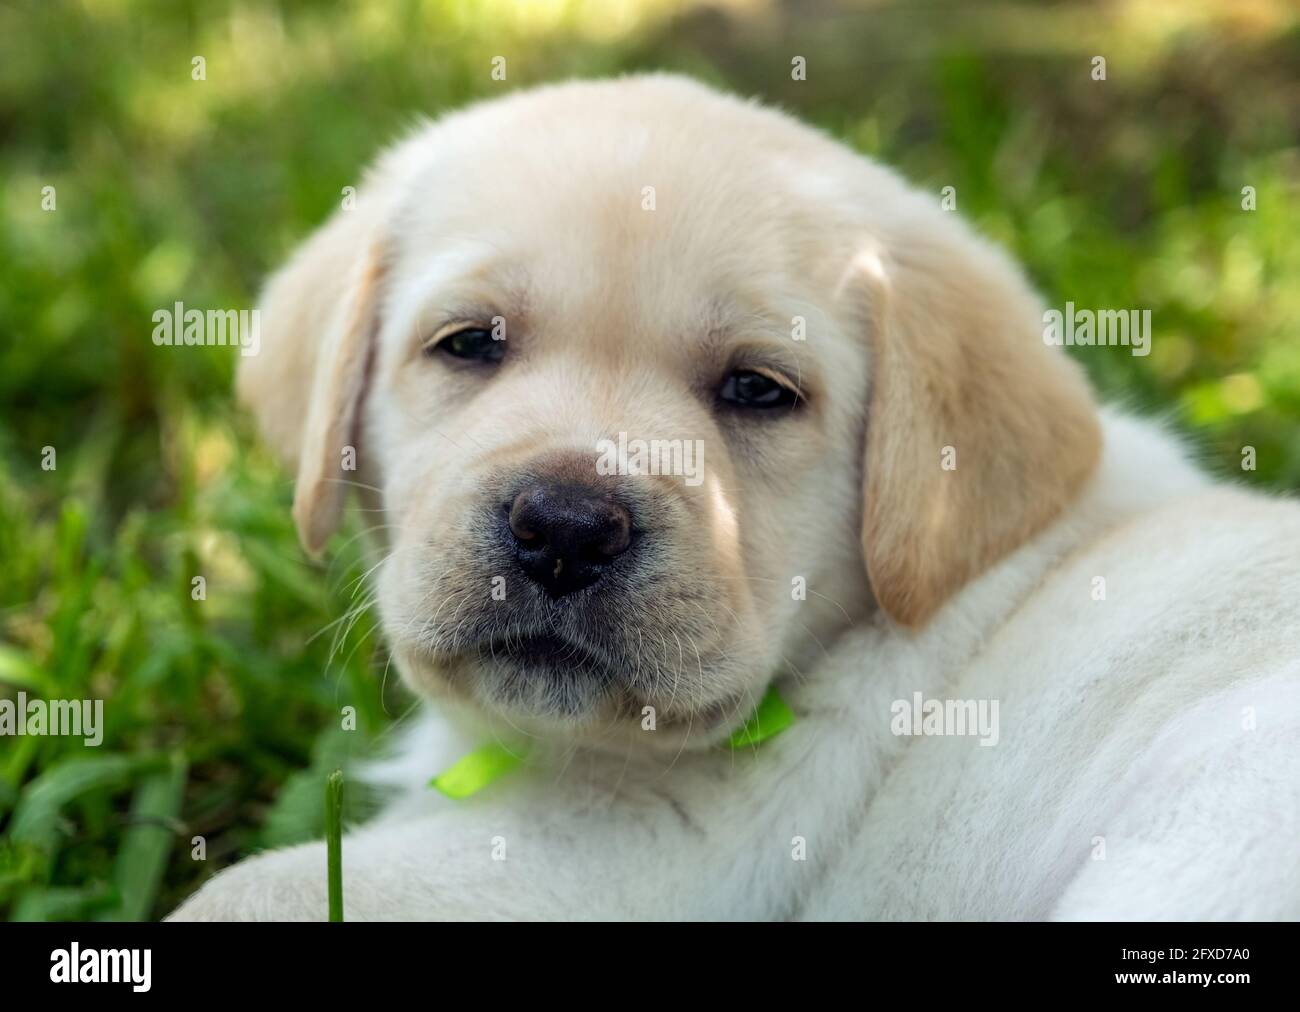 Cucciolo di Labrador in erba verde Foto stock - Alamy